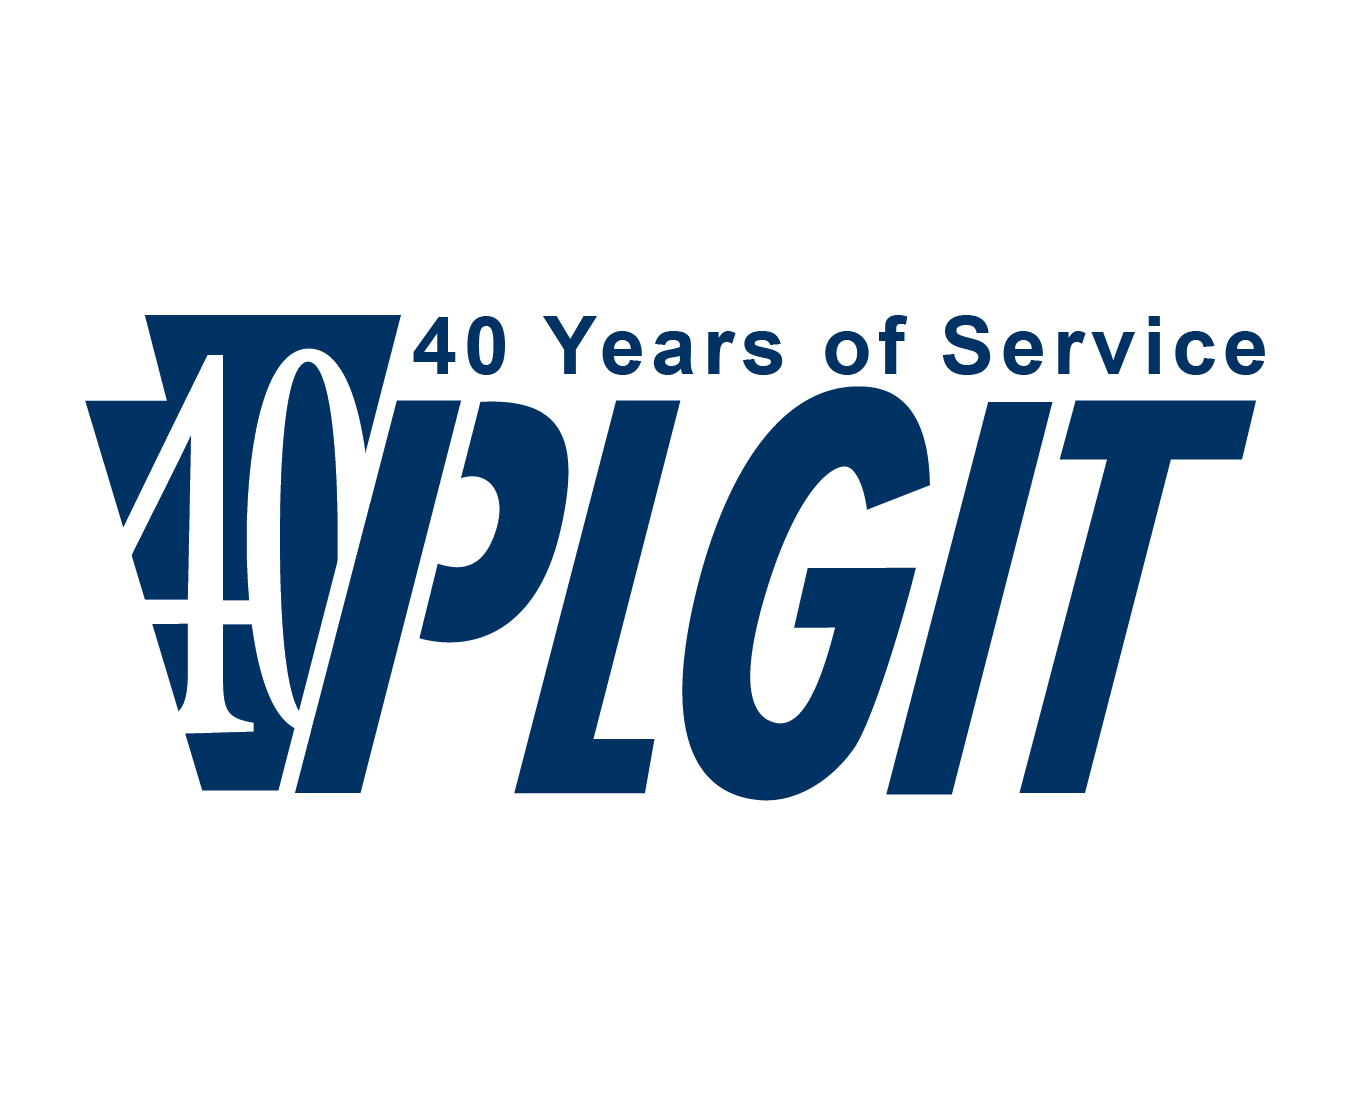 PLGIT logo